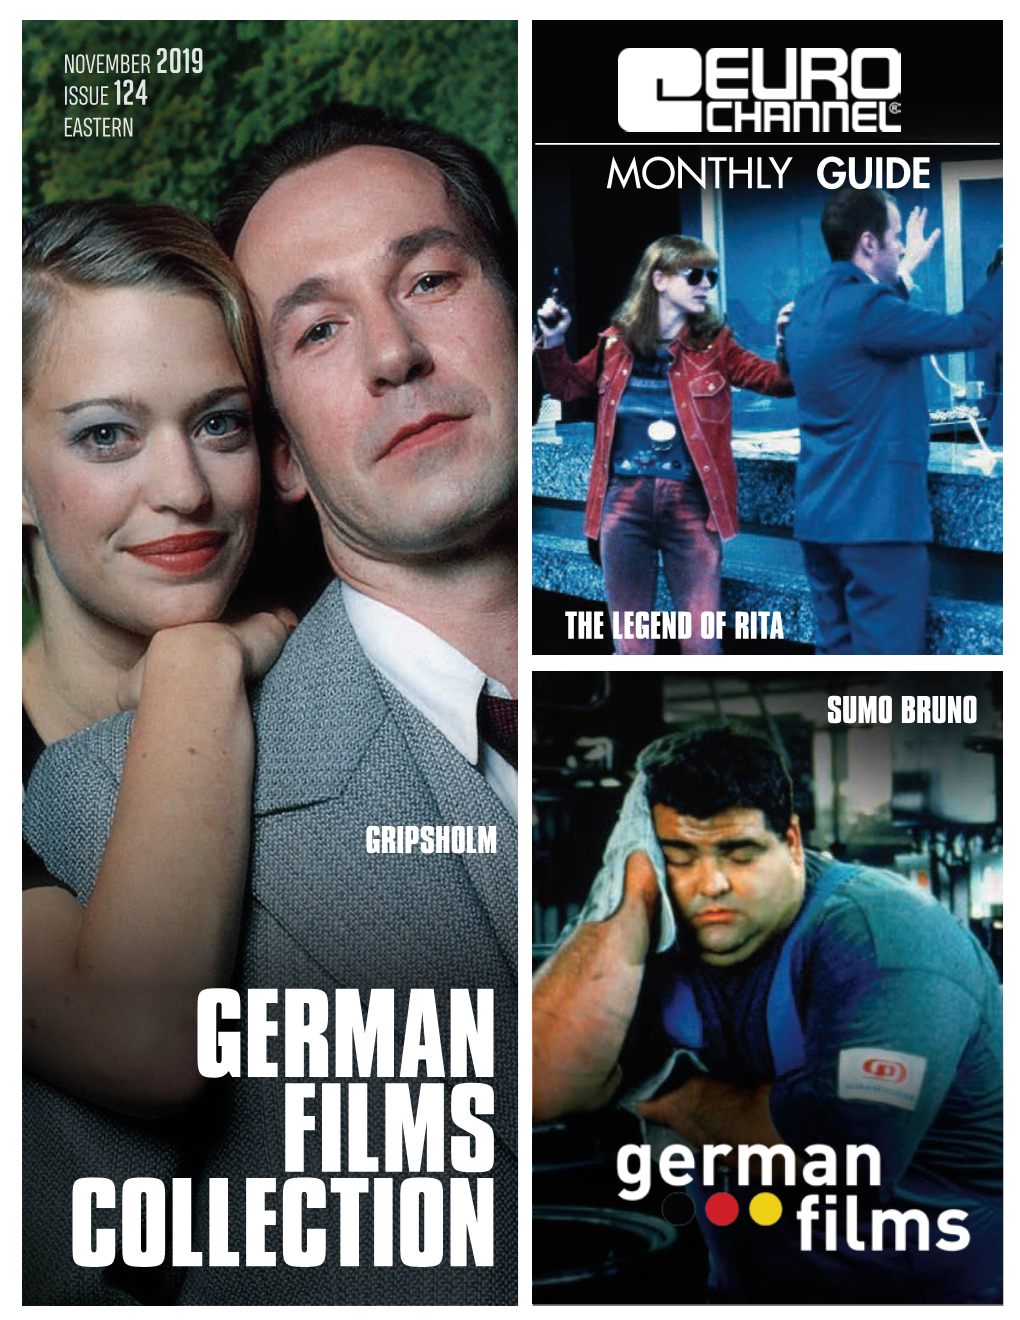 German Films Collection EUROCHANNEL GUIDE NOVEMBER 2019 1 Germanfilmseurochannel2019.Qxp 119X152 17.10.19 09:45 Seite 1